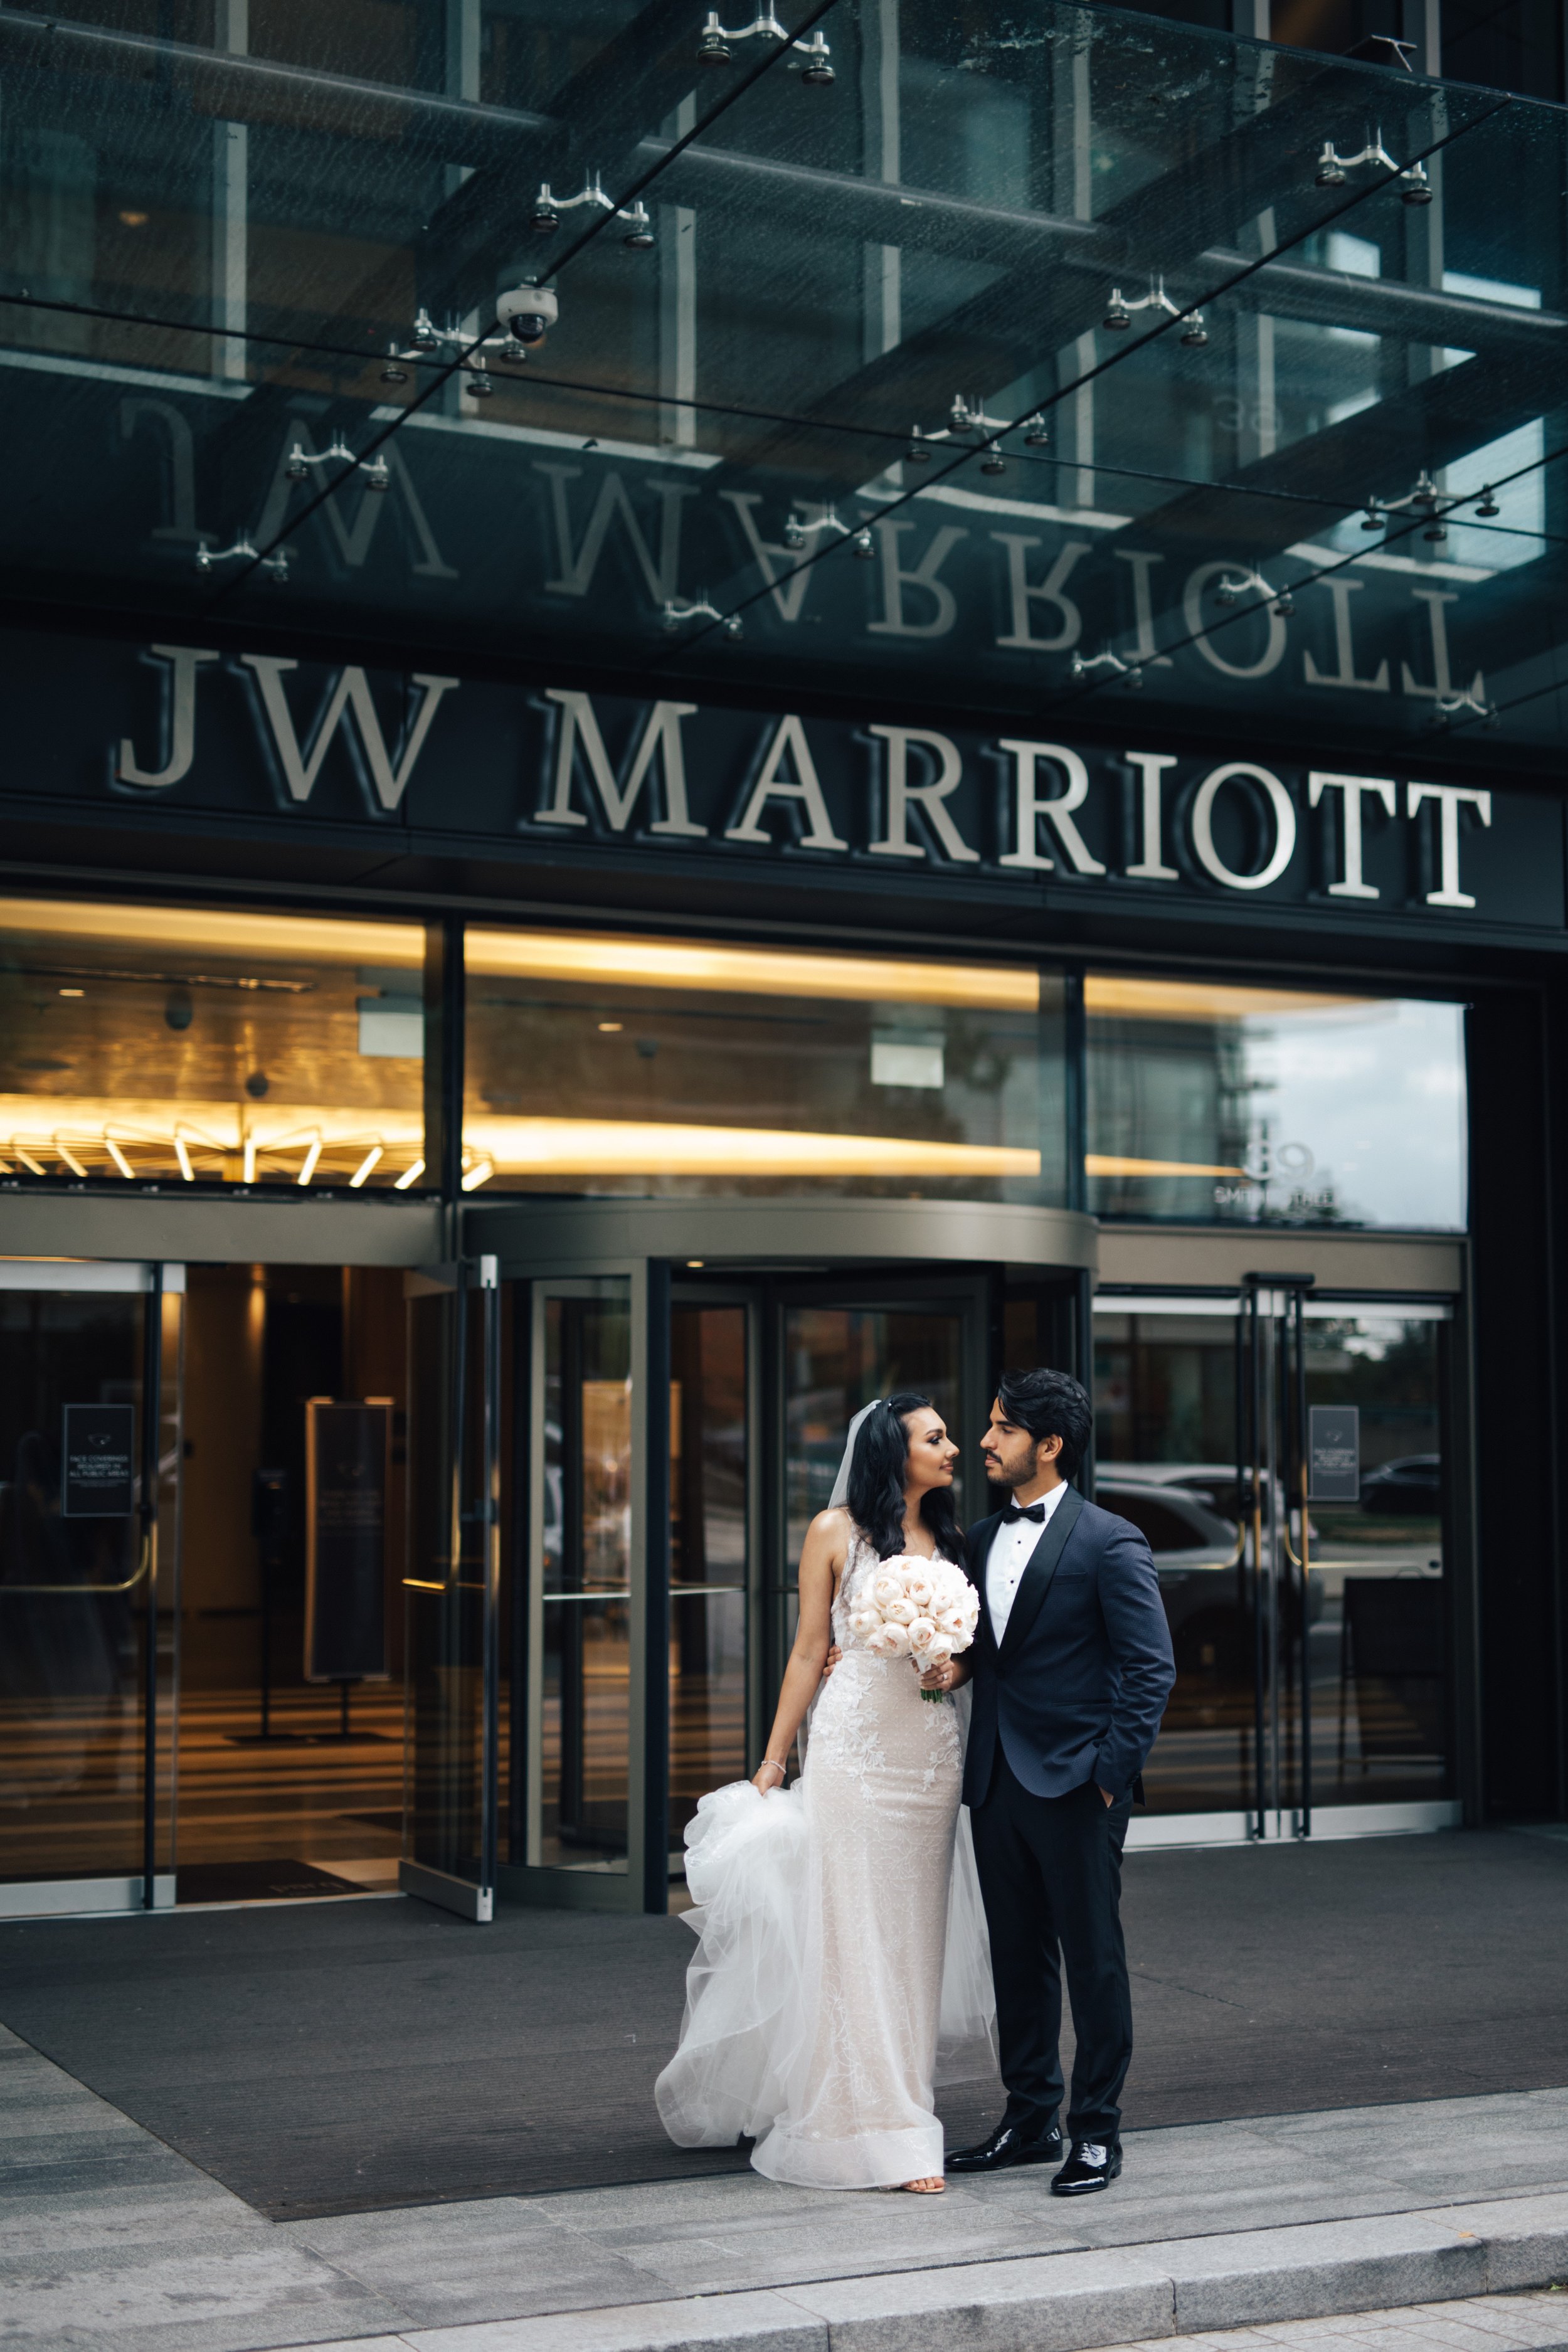 jw marriot vancouver wedding.jpg